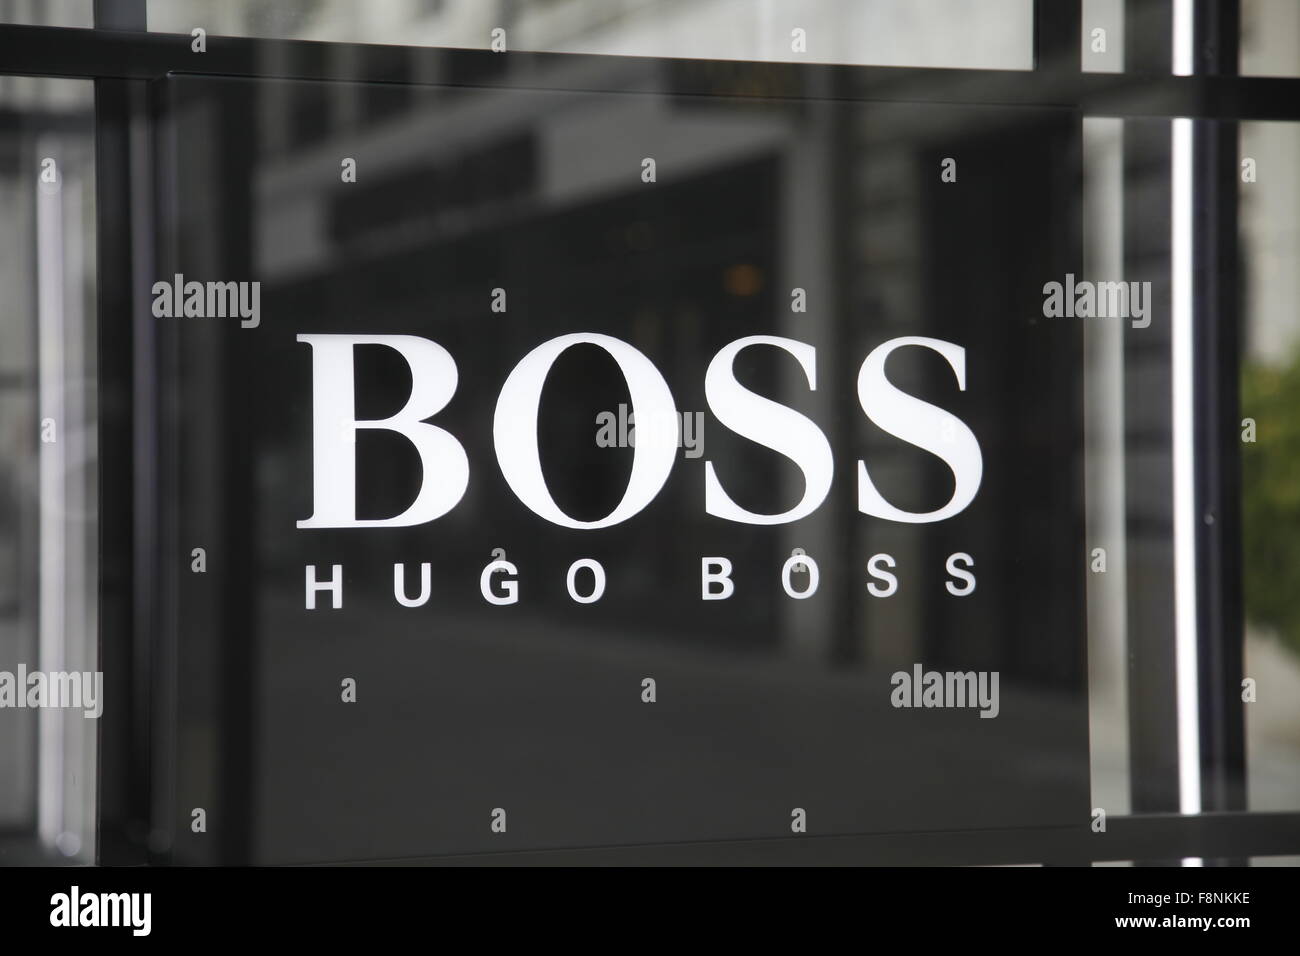 different hugo boss labels